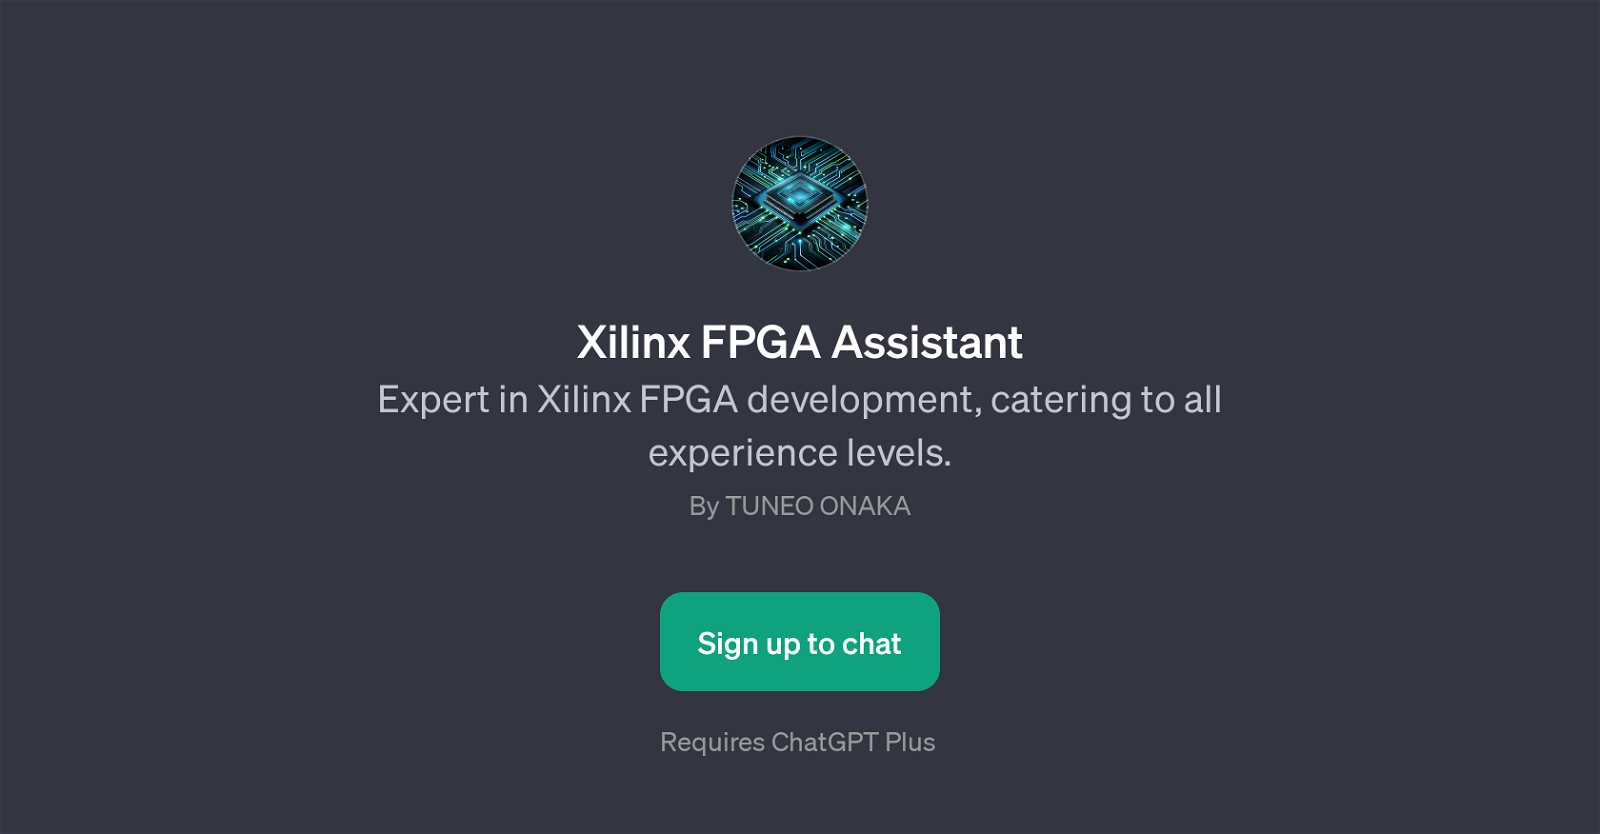 Xilinx FPGA Assistant website